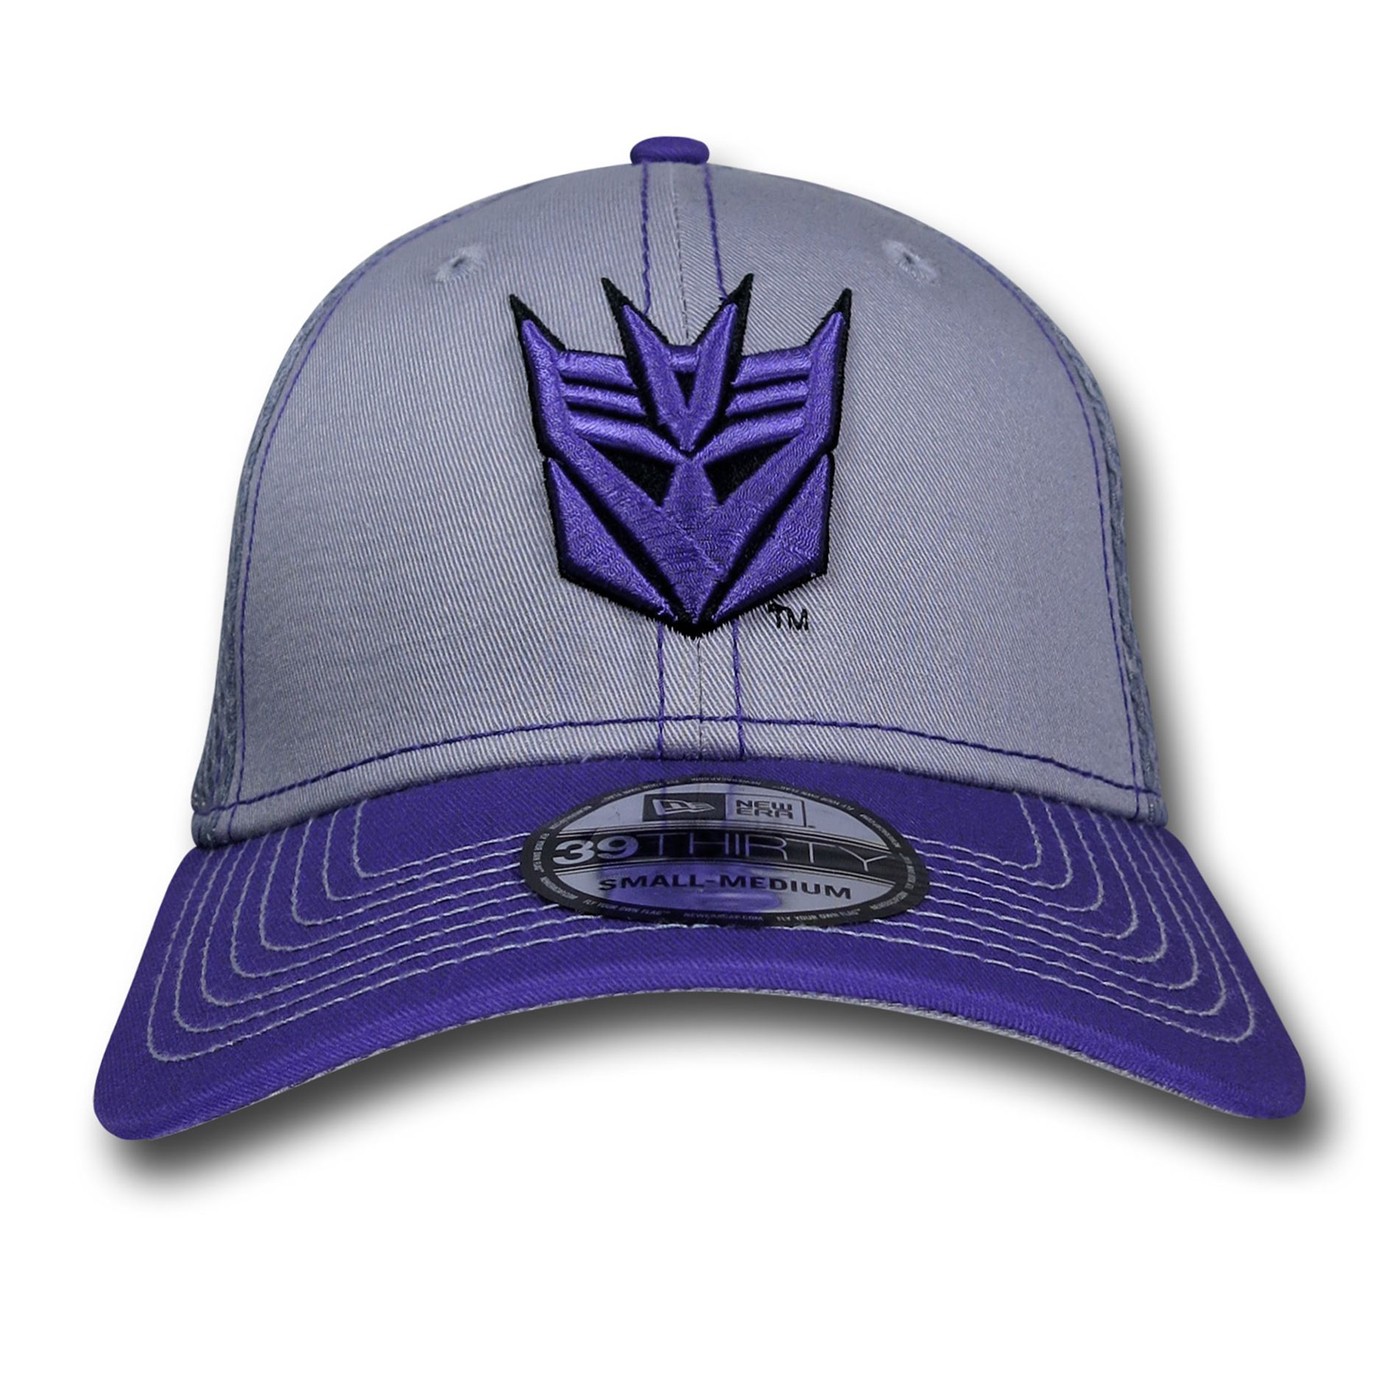 Transformers Decepticon Neo 39Thirty Cap